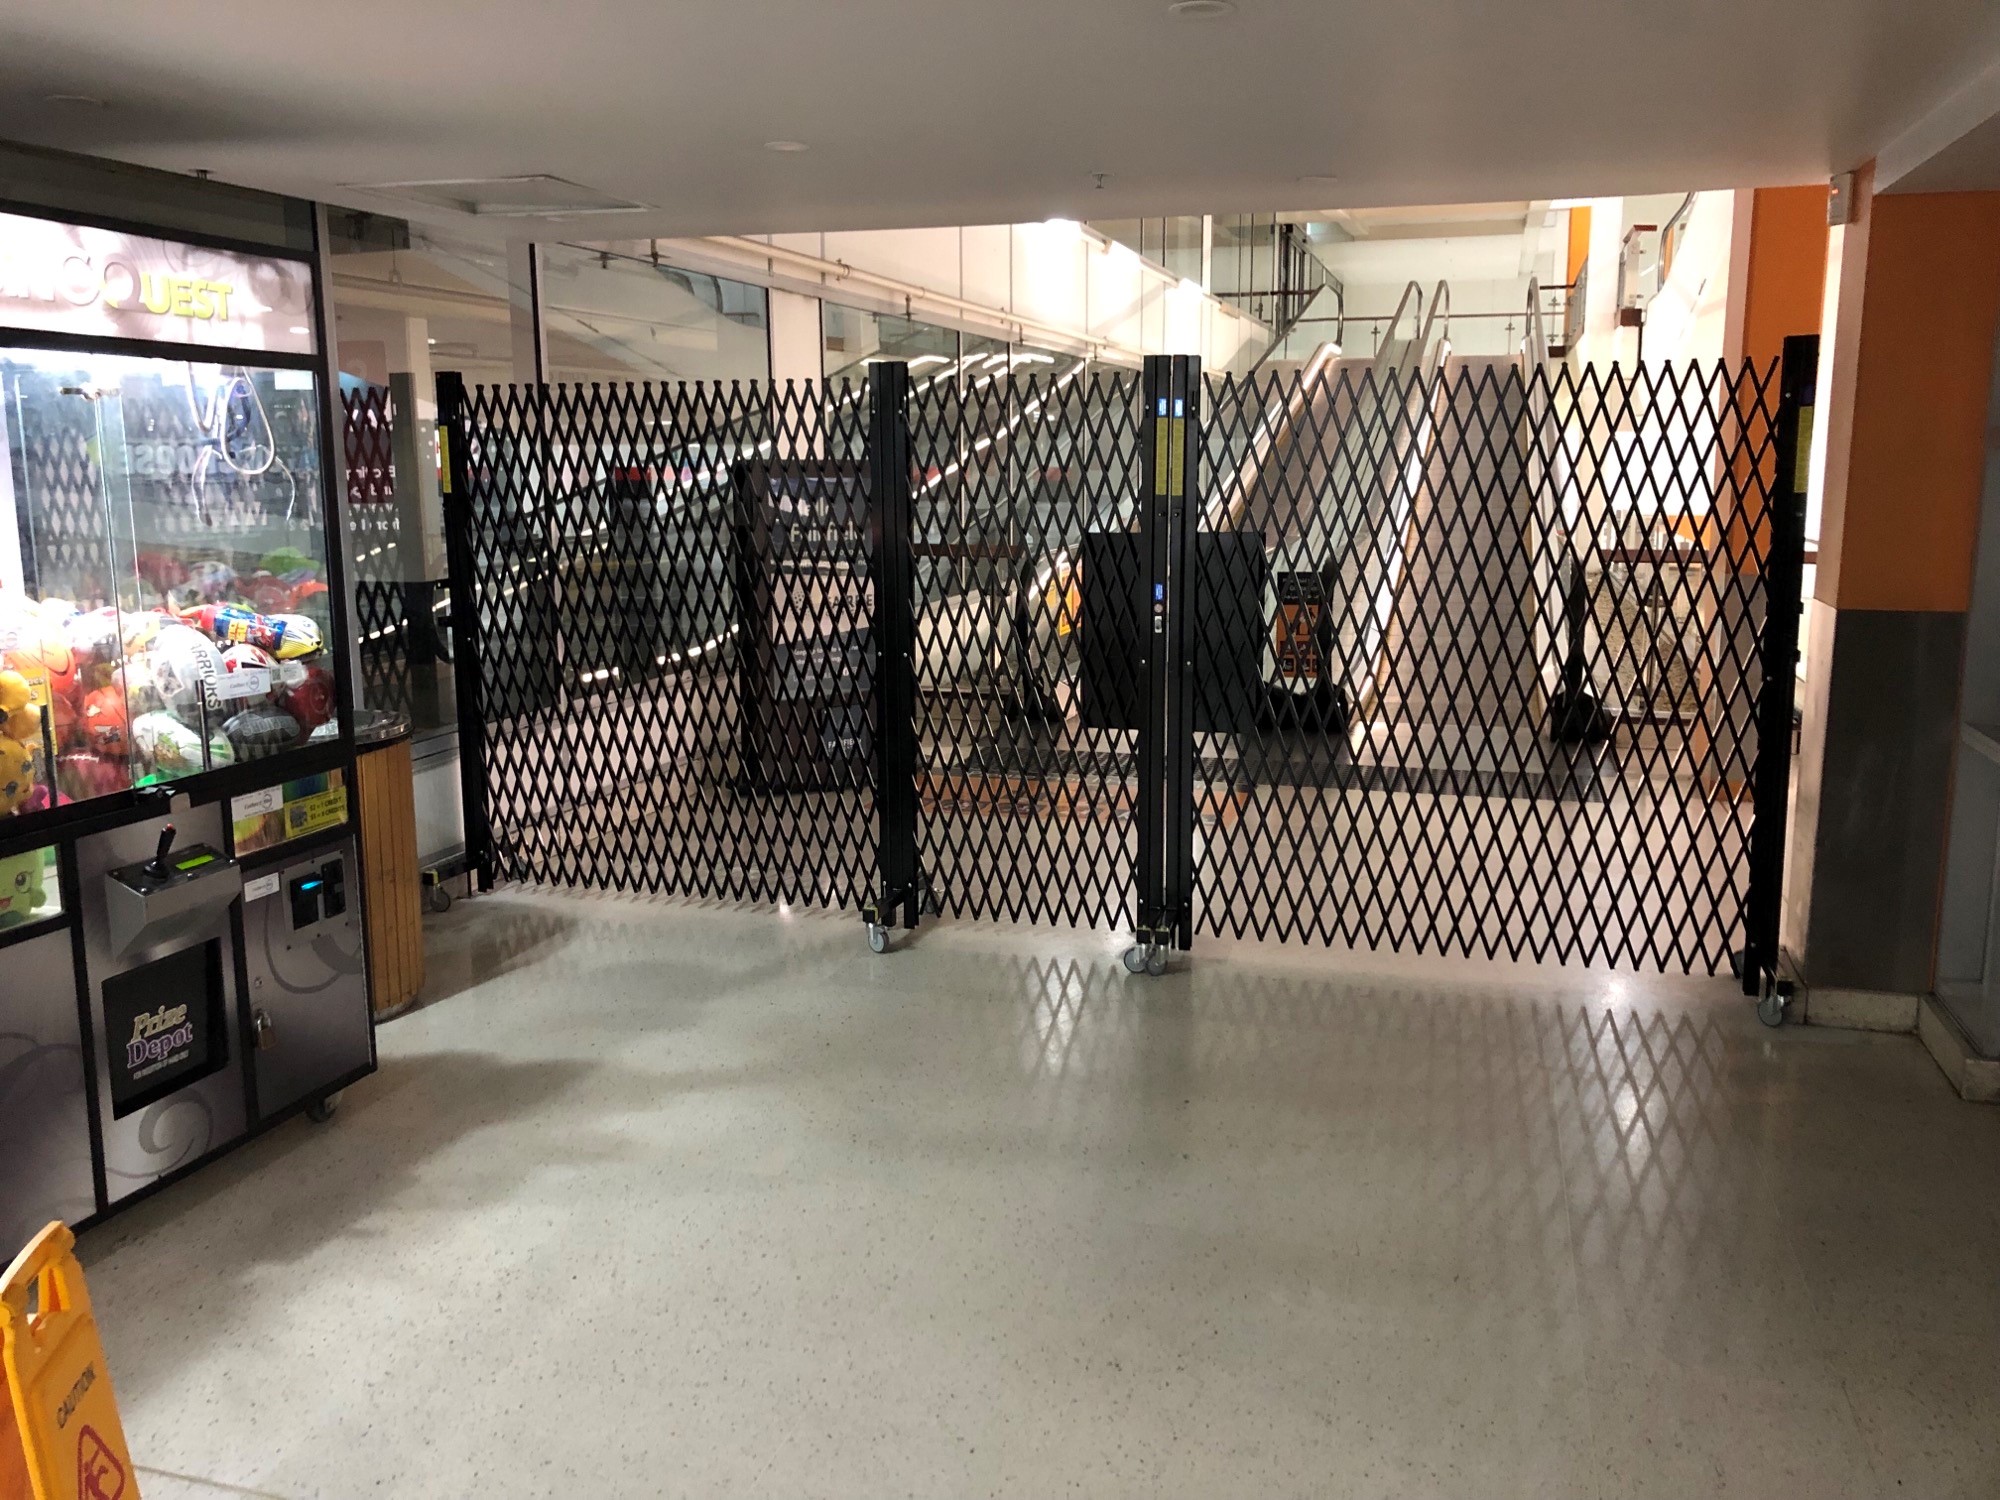 Trellis security gates in Fairfield City Central parking area